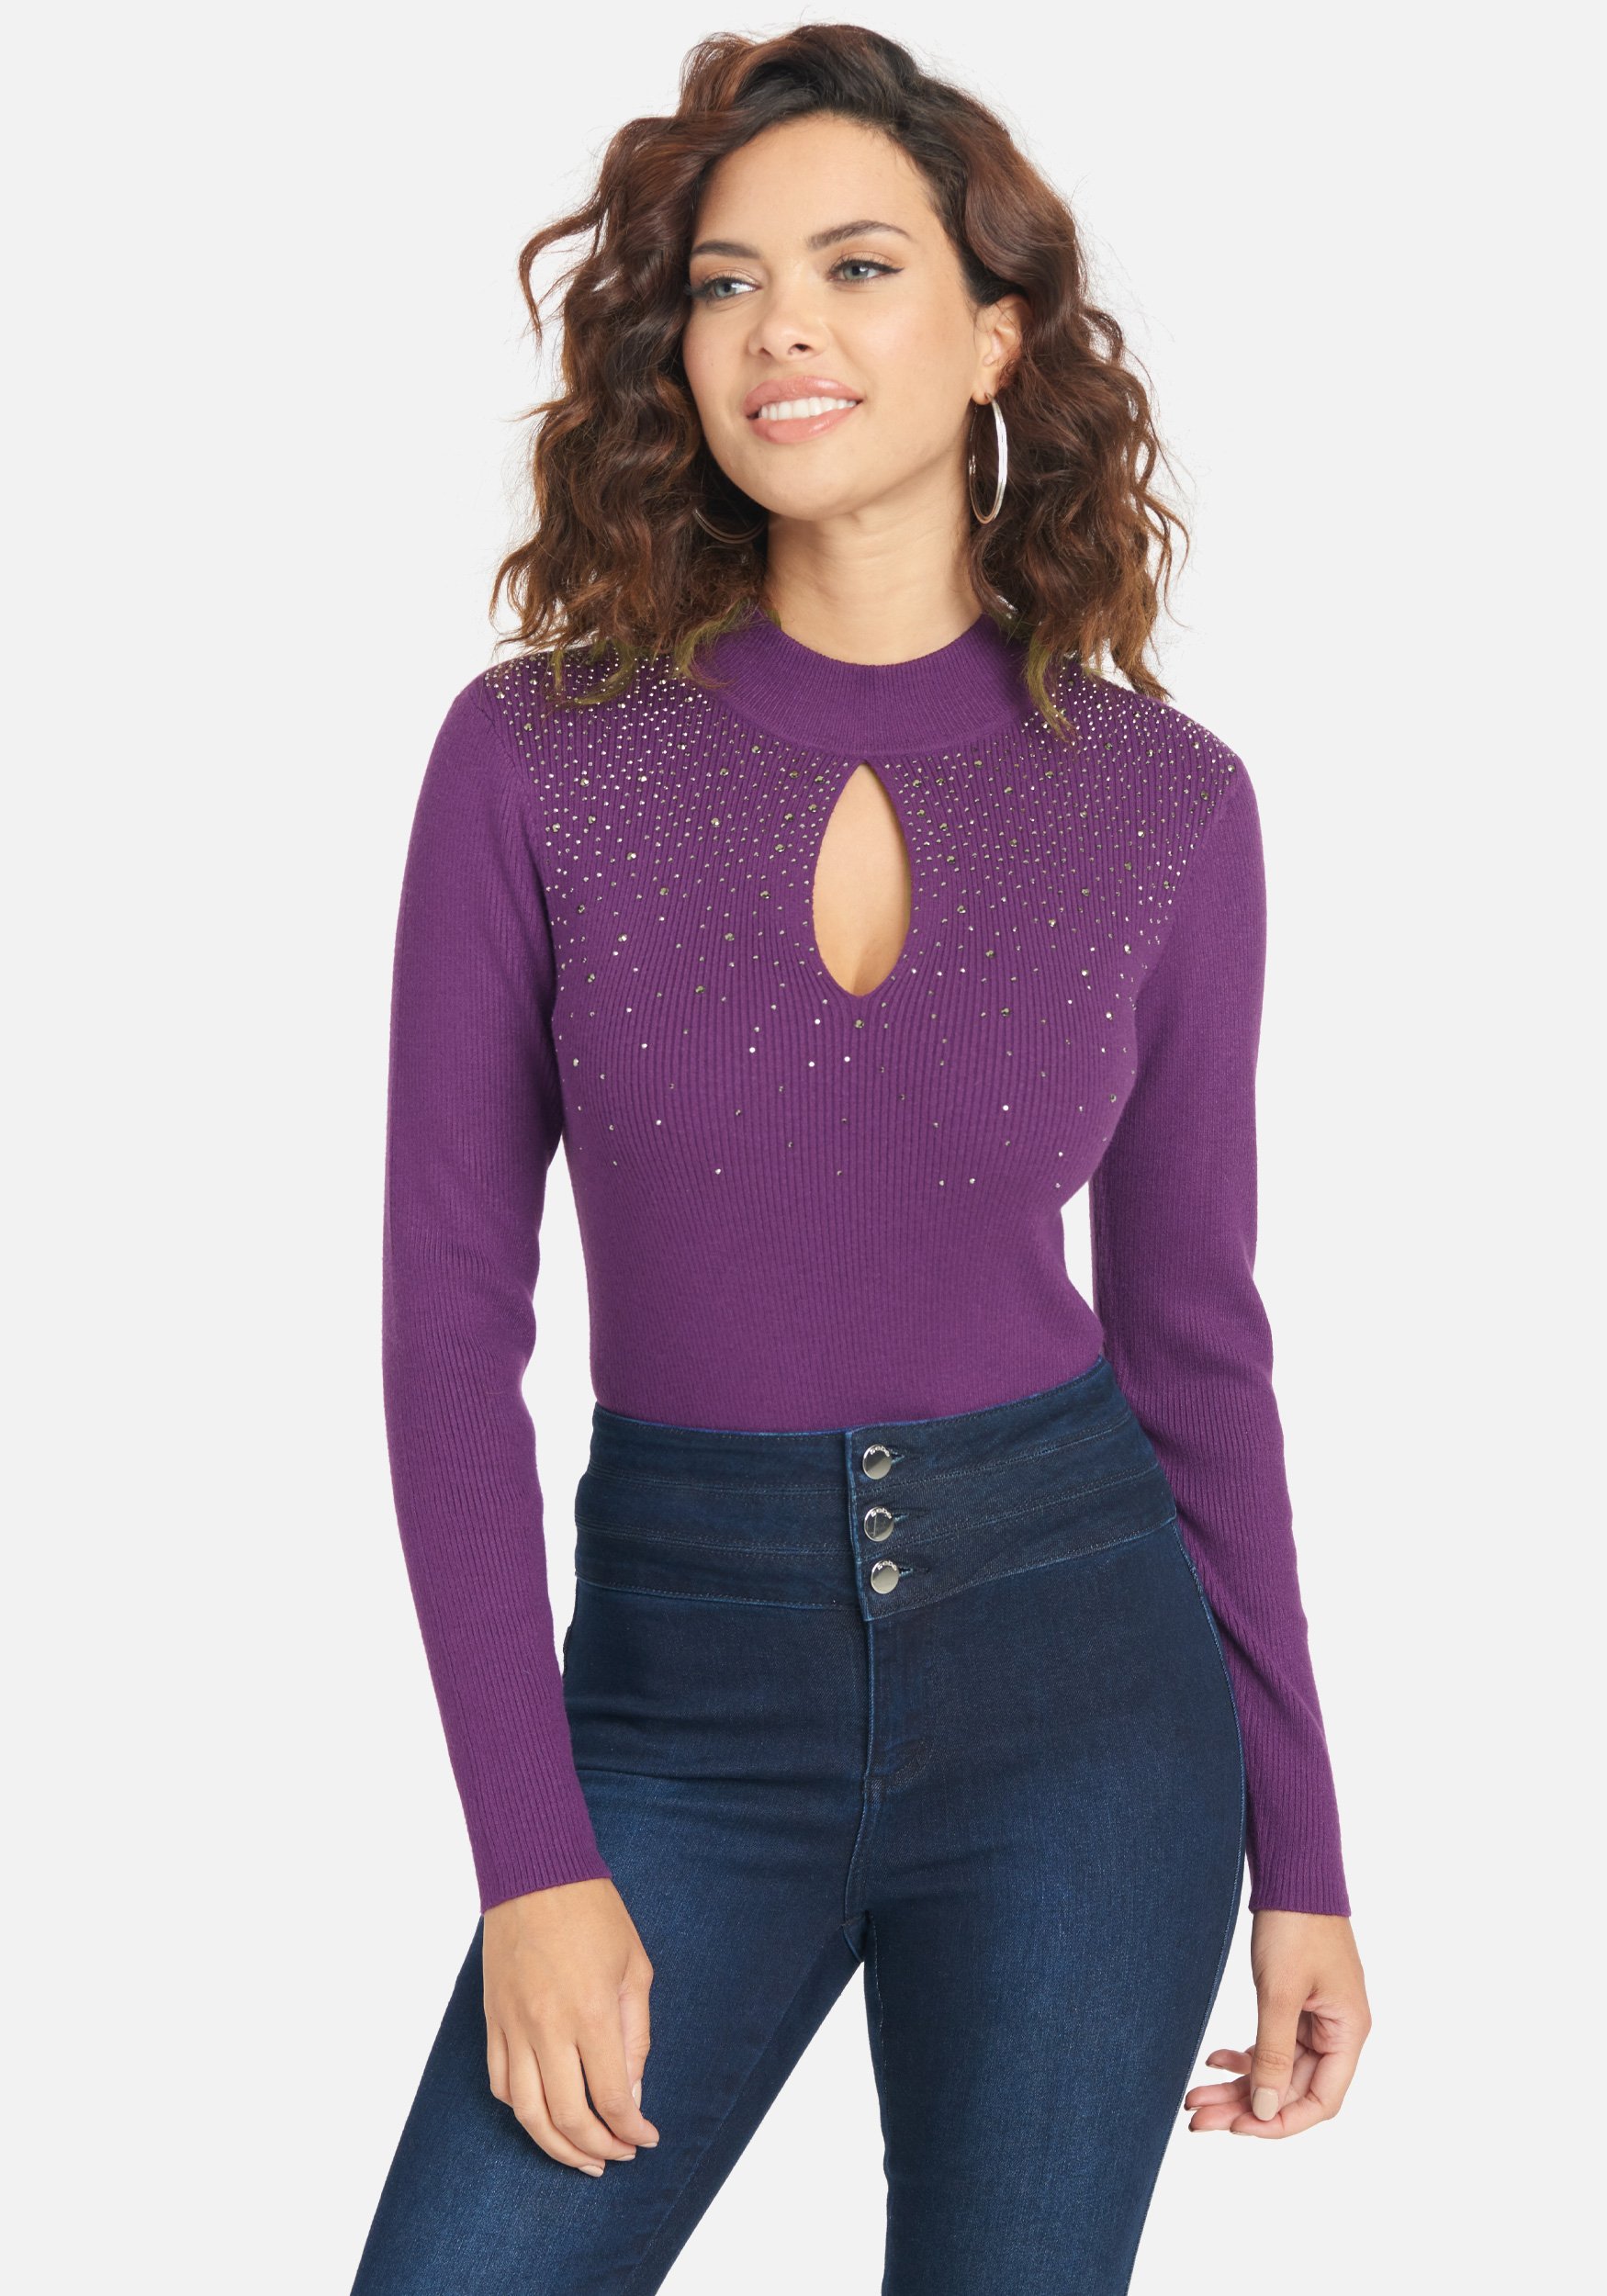 Bebe Women's Cut Out Rhinestone Sweater, Size XS in Imperial Purple Viscose/Nylon